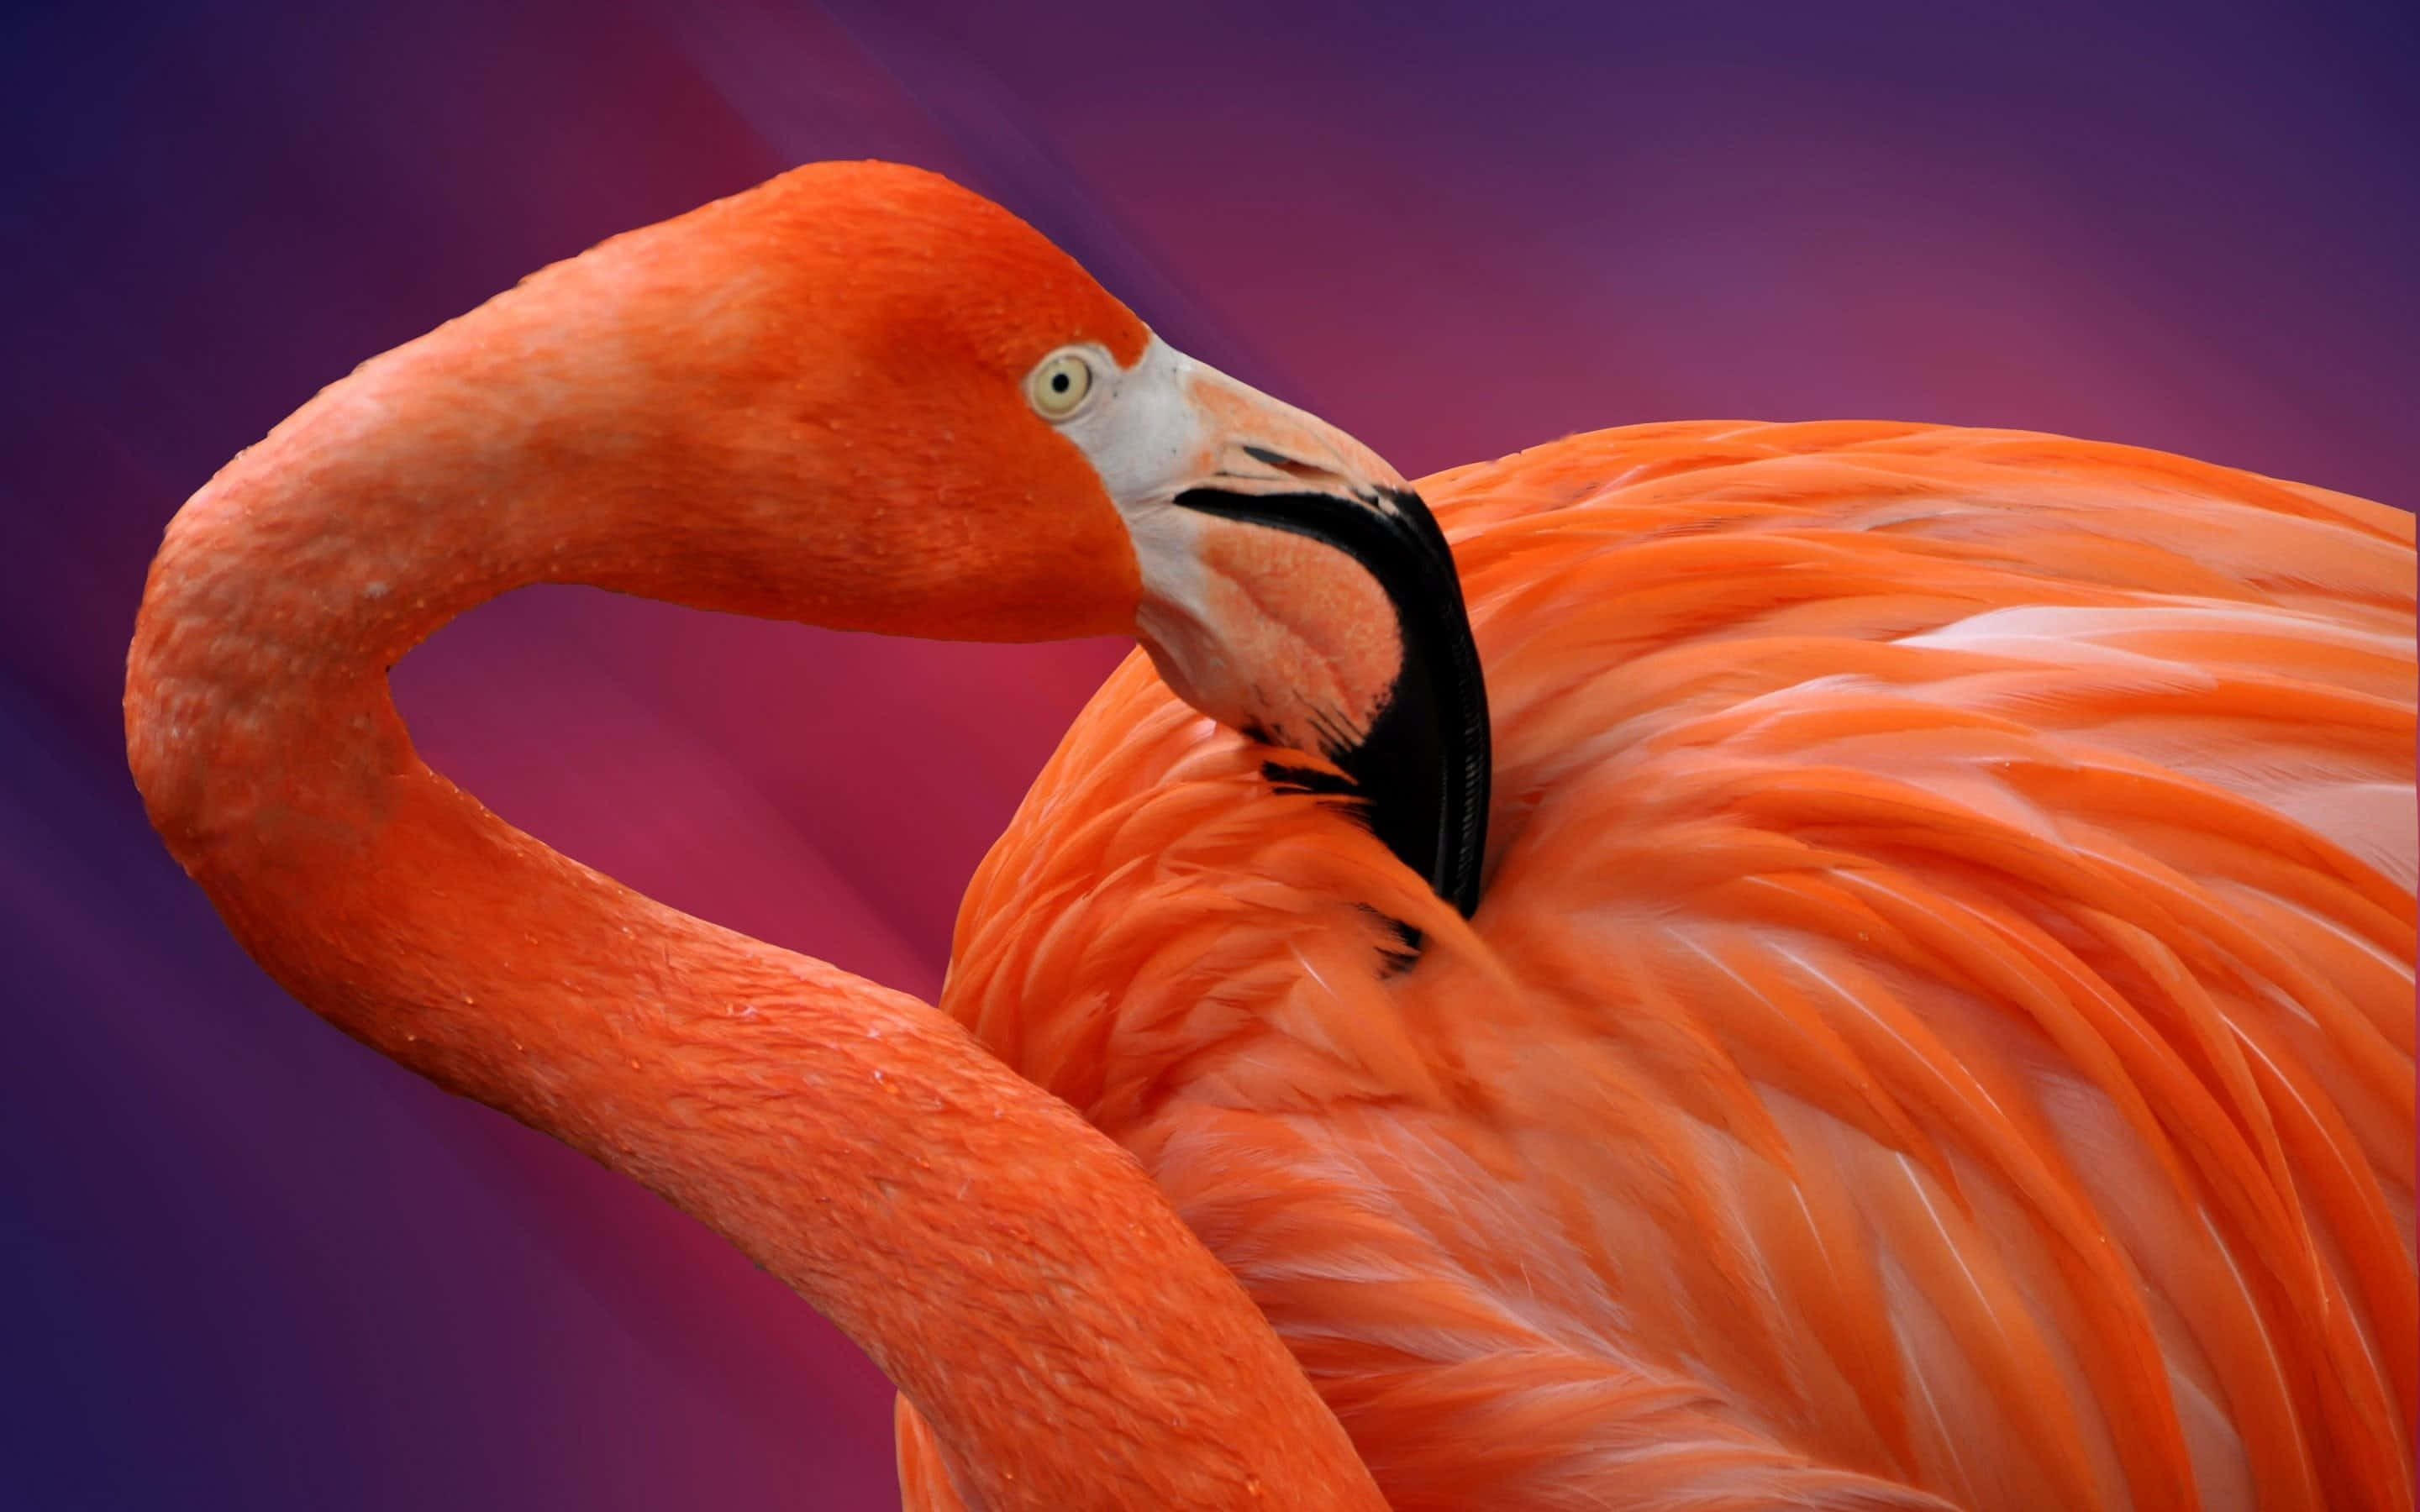 The Flamingo in its Natural Habitat